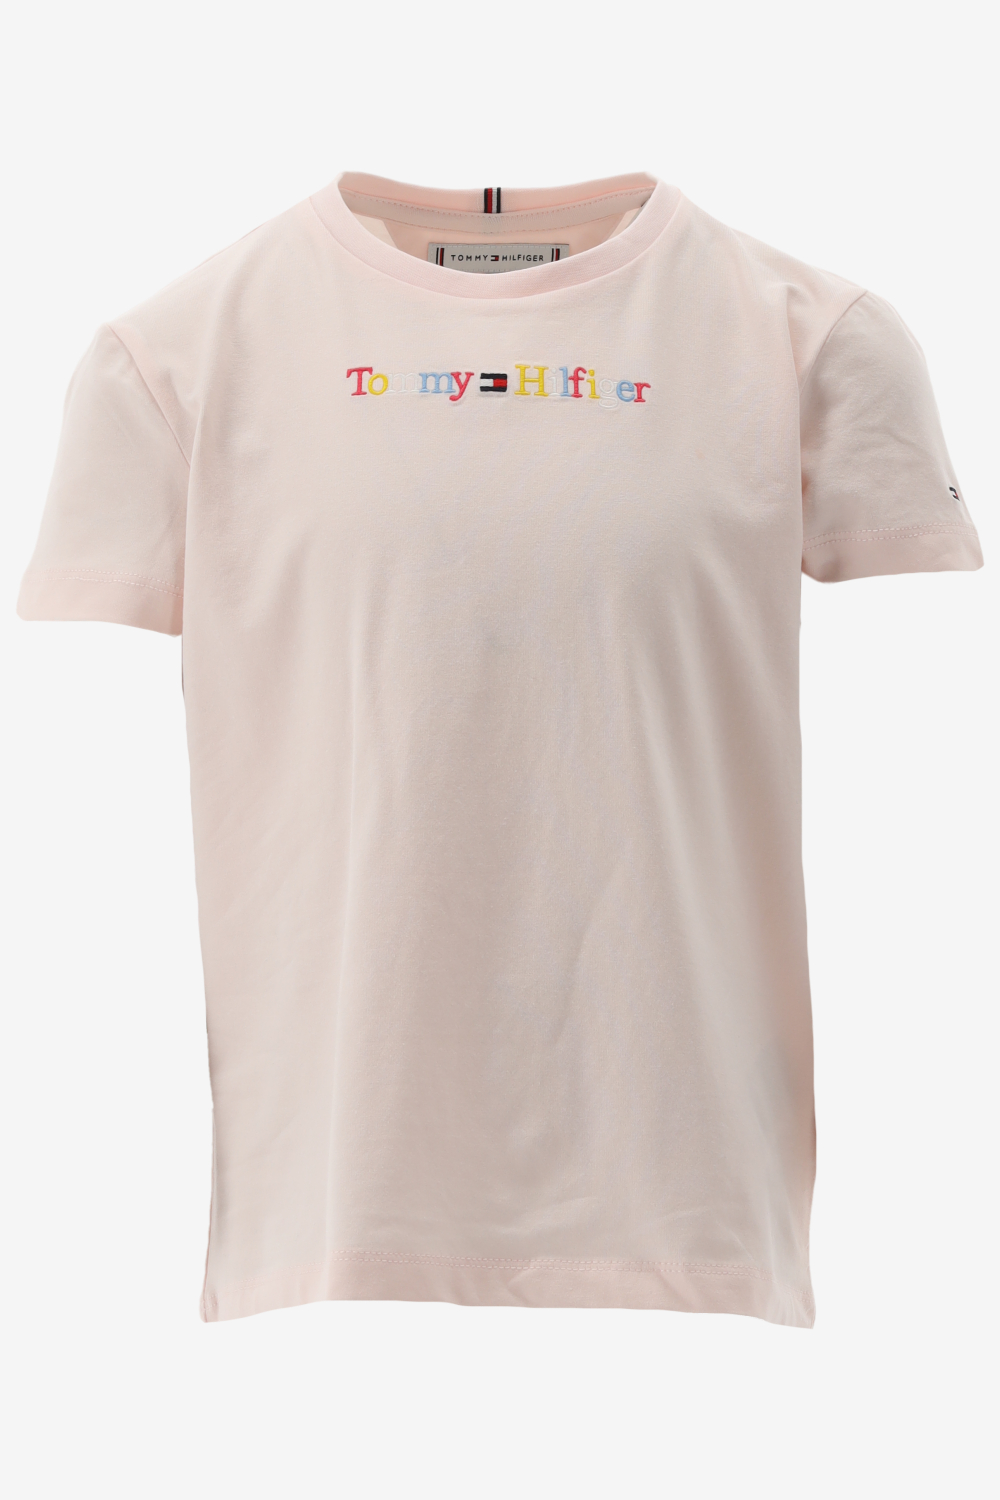 Tommy hilfiger t-shirt maat 116/6J